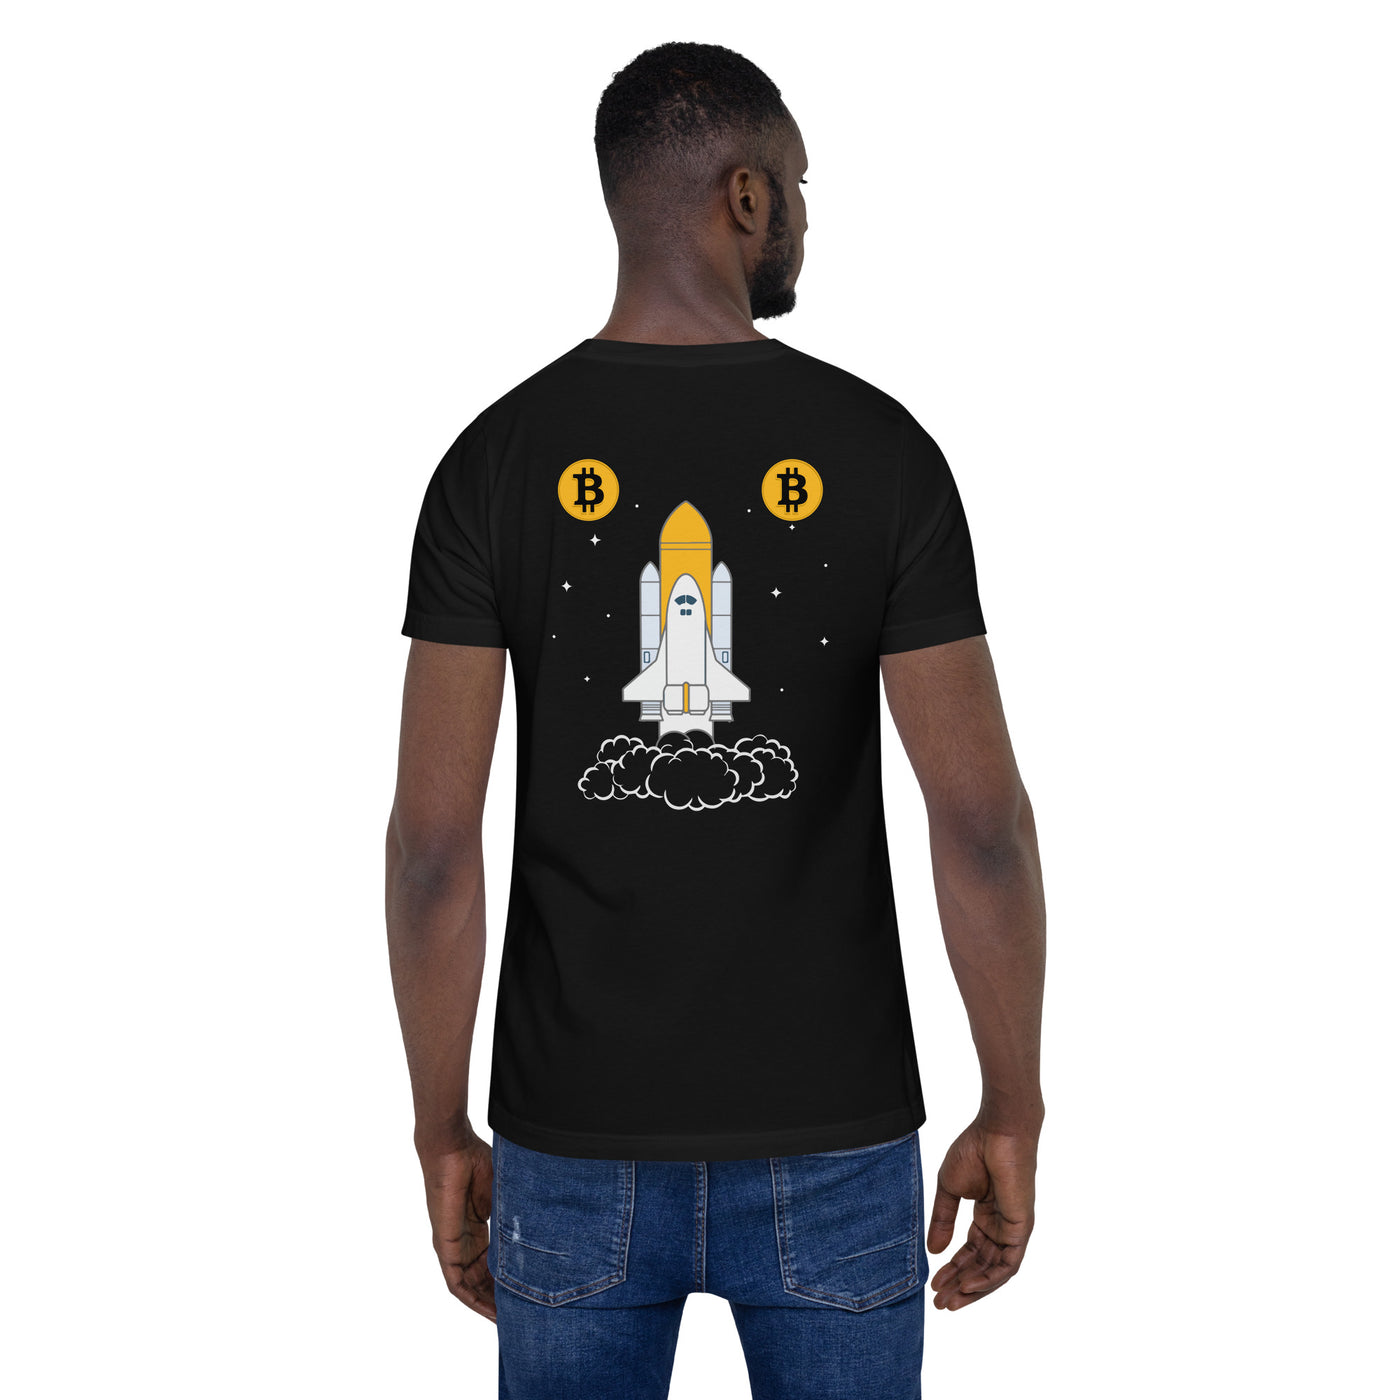 Bitcoin Spaceship Unisex t-shirt ( Back Print )